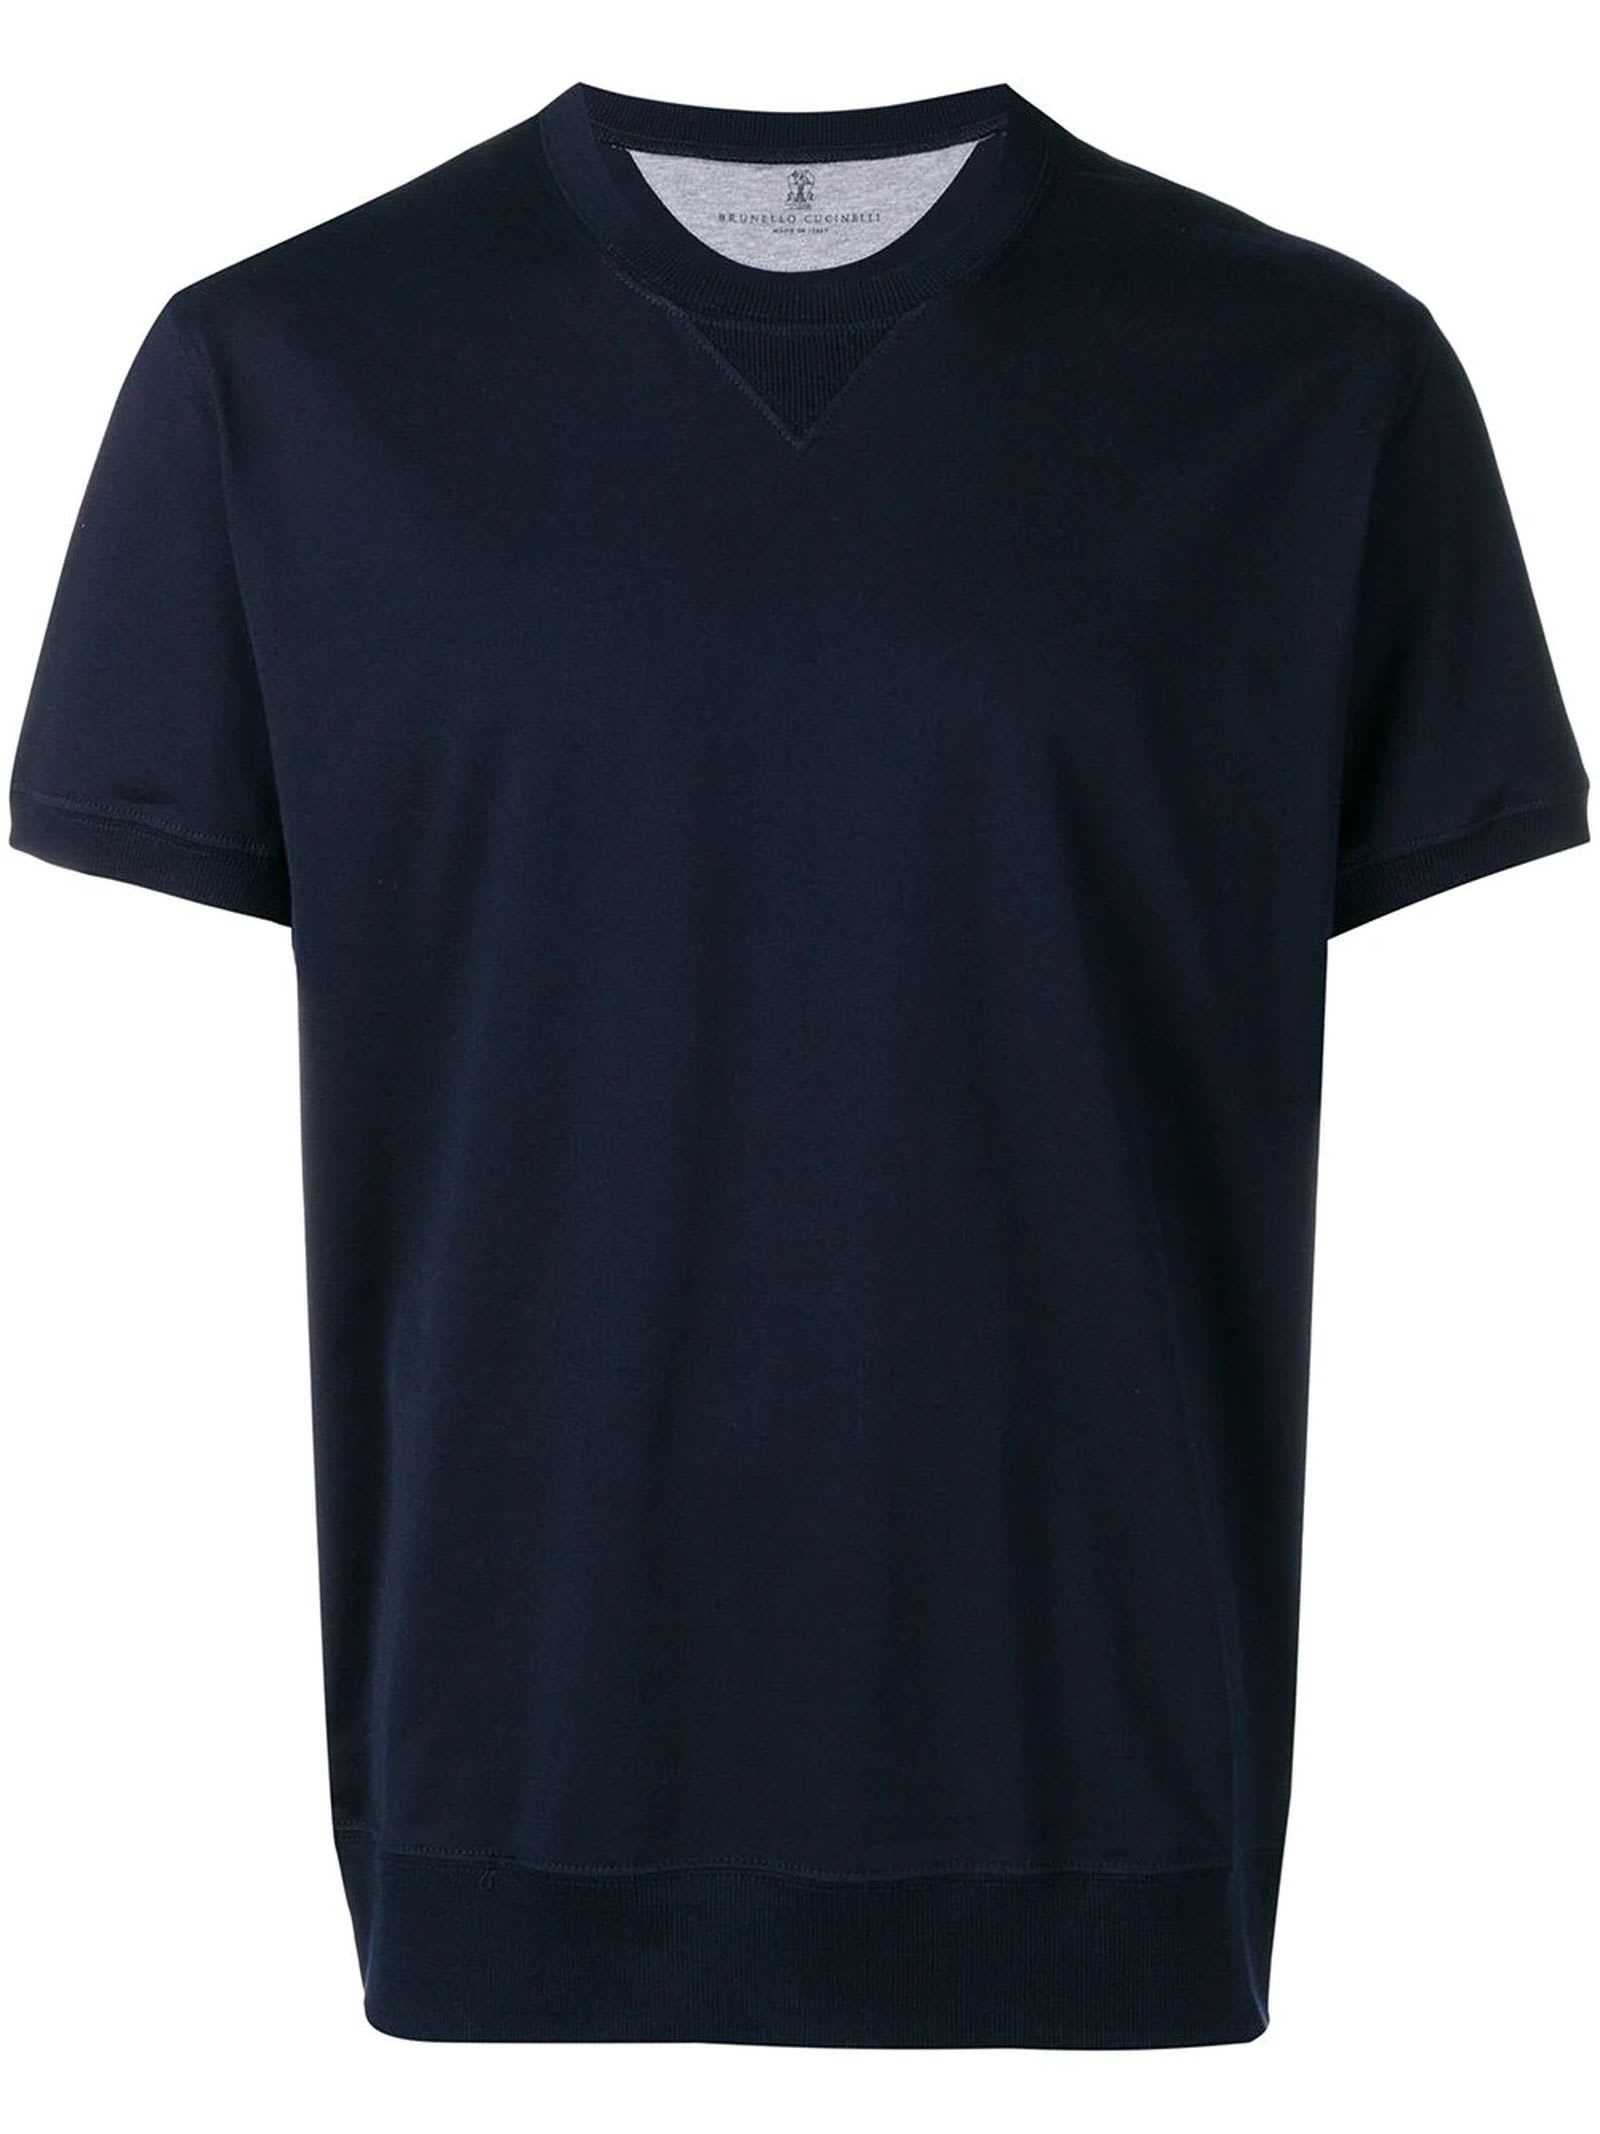 Brunello Cucinelli Navy Blue Cotton Blend Sweat T-shirt